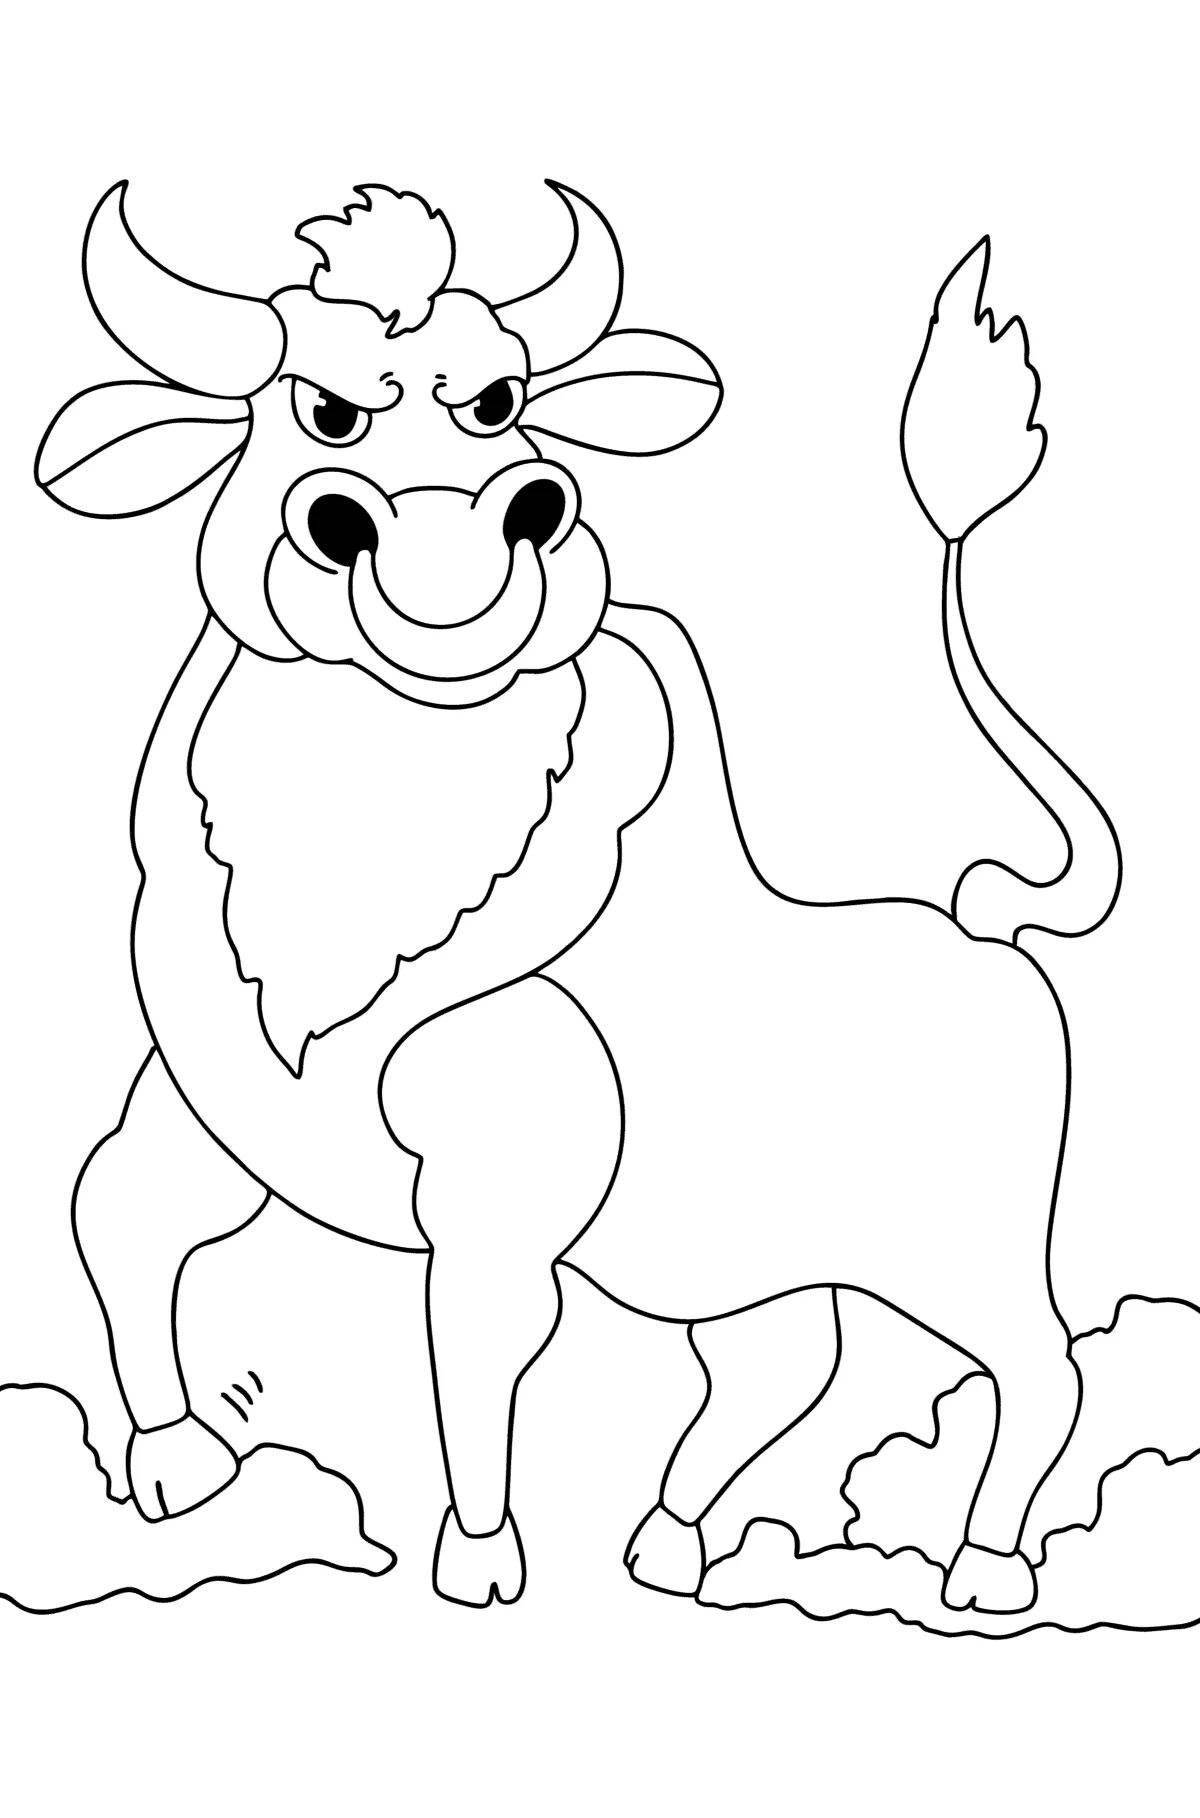 A fun bull coloring book for kids